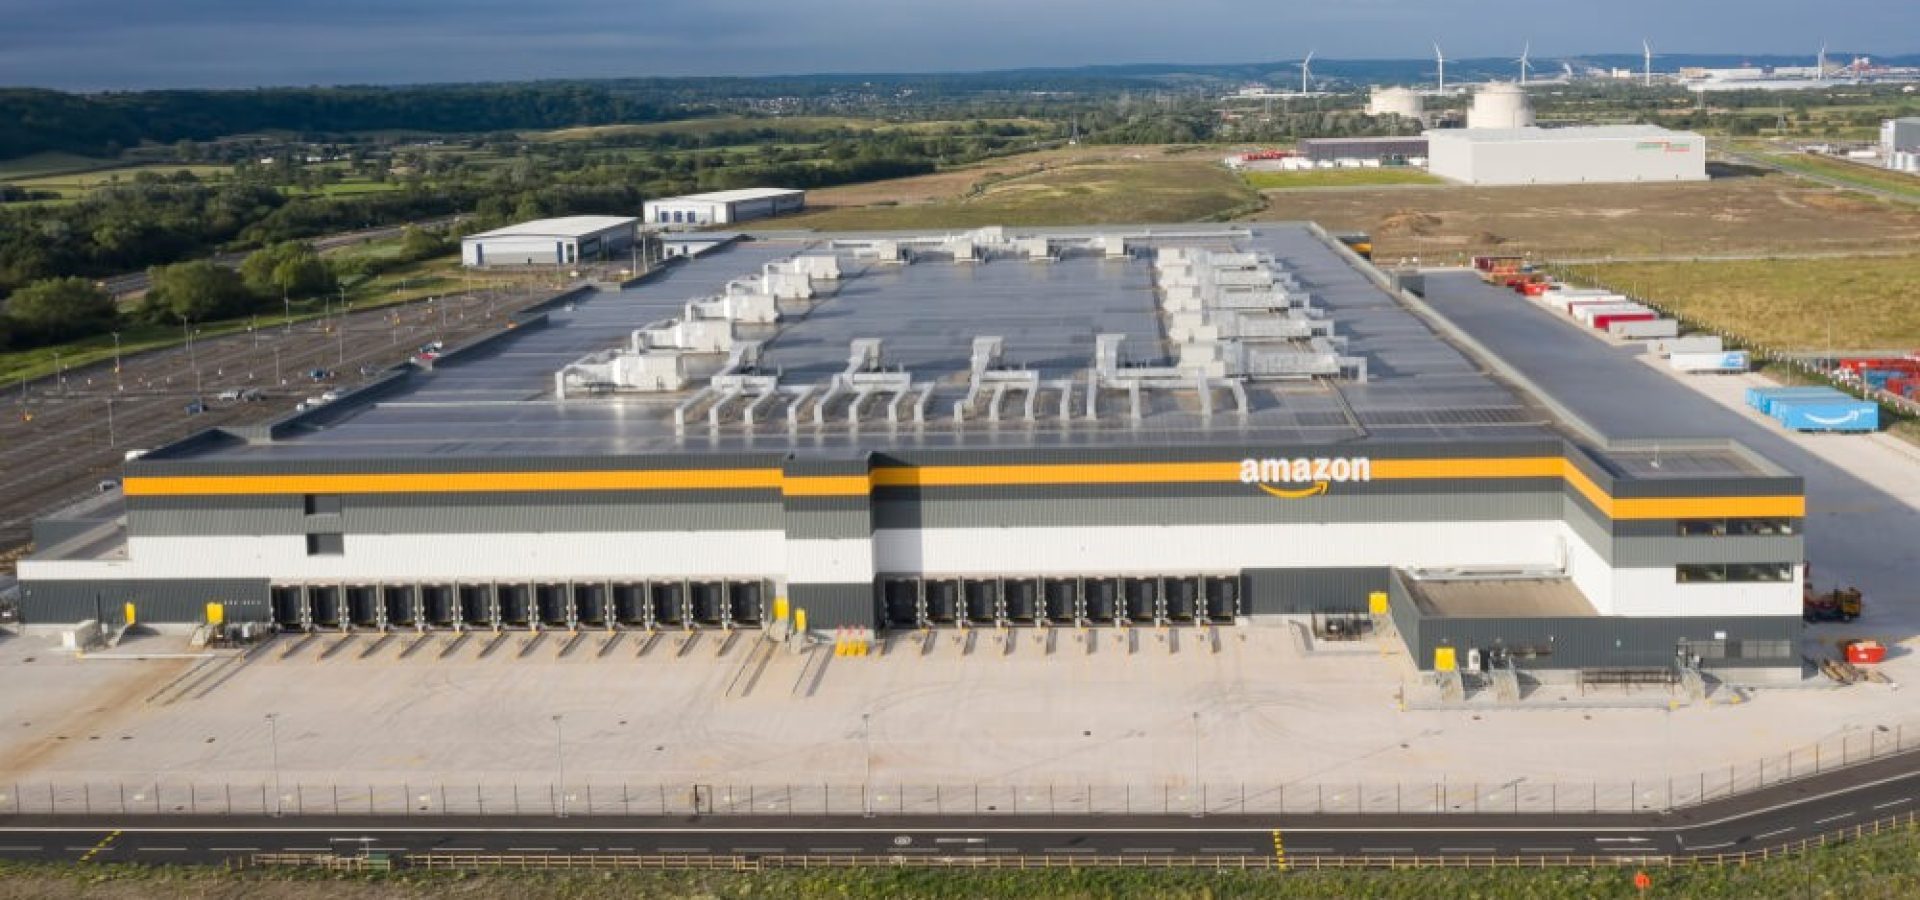 Amazon warehouse & distribution centre building.